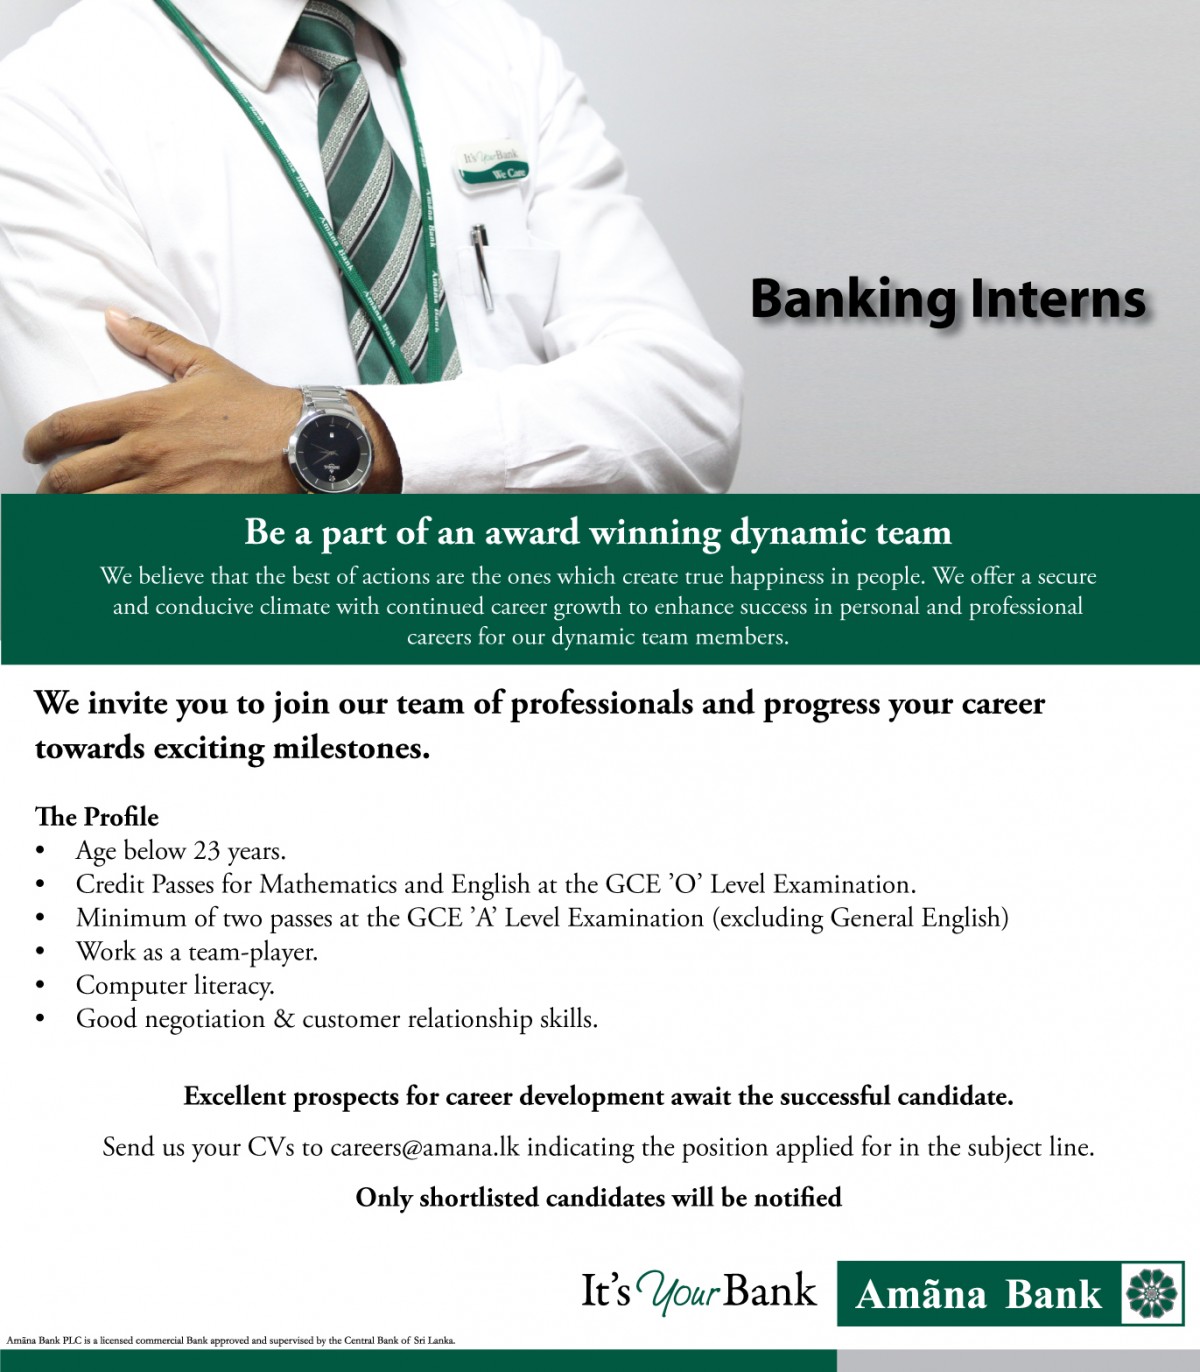 Banking Interns Jobs Vacancies - Amana Bank Jobs Vacancy Details